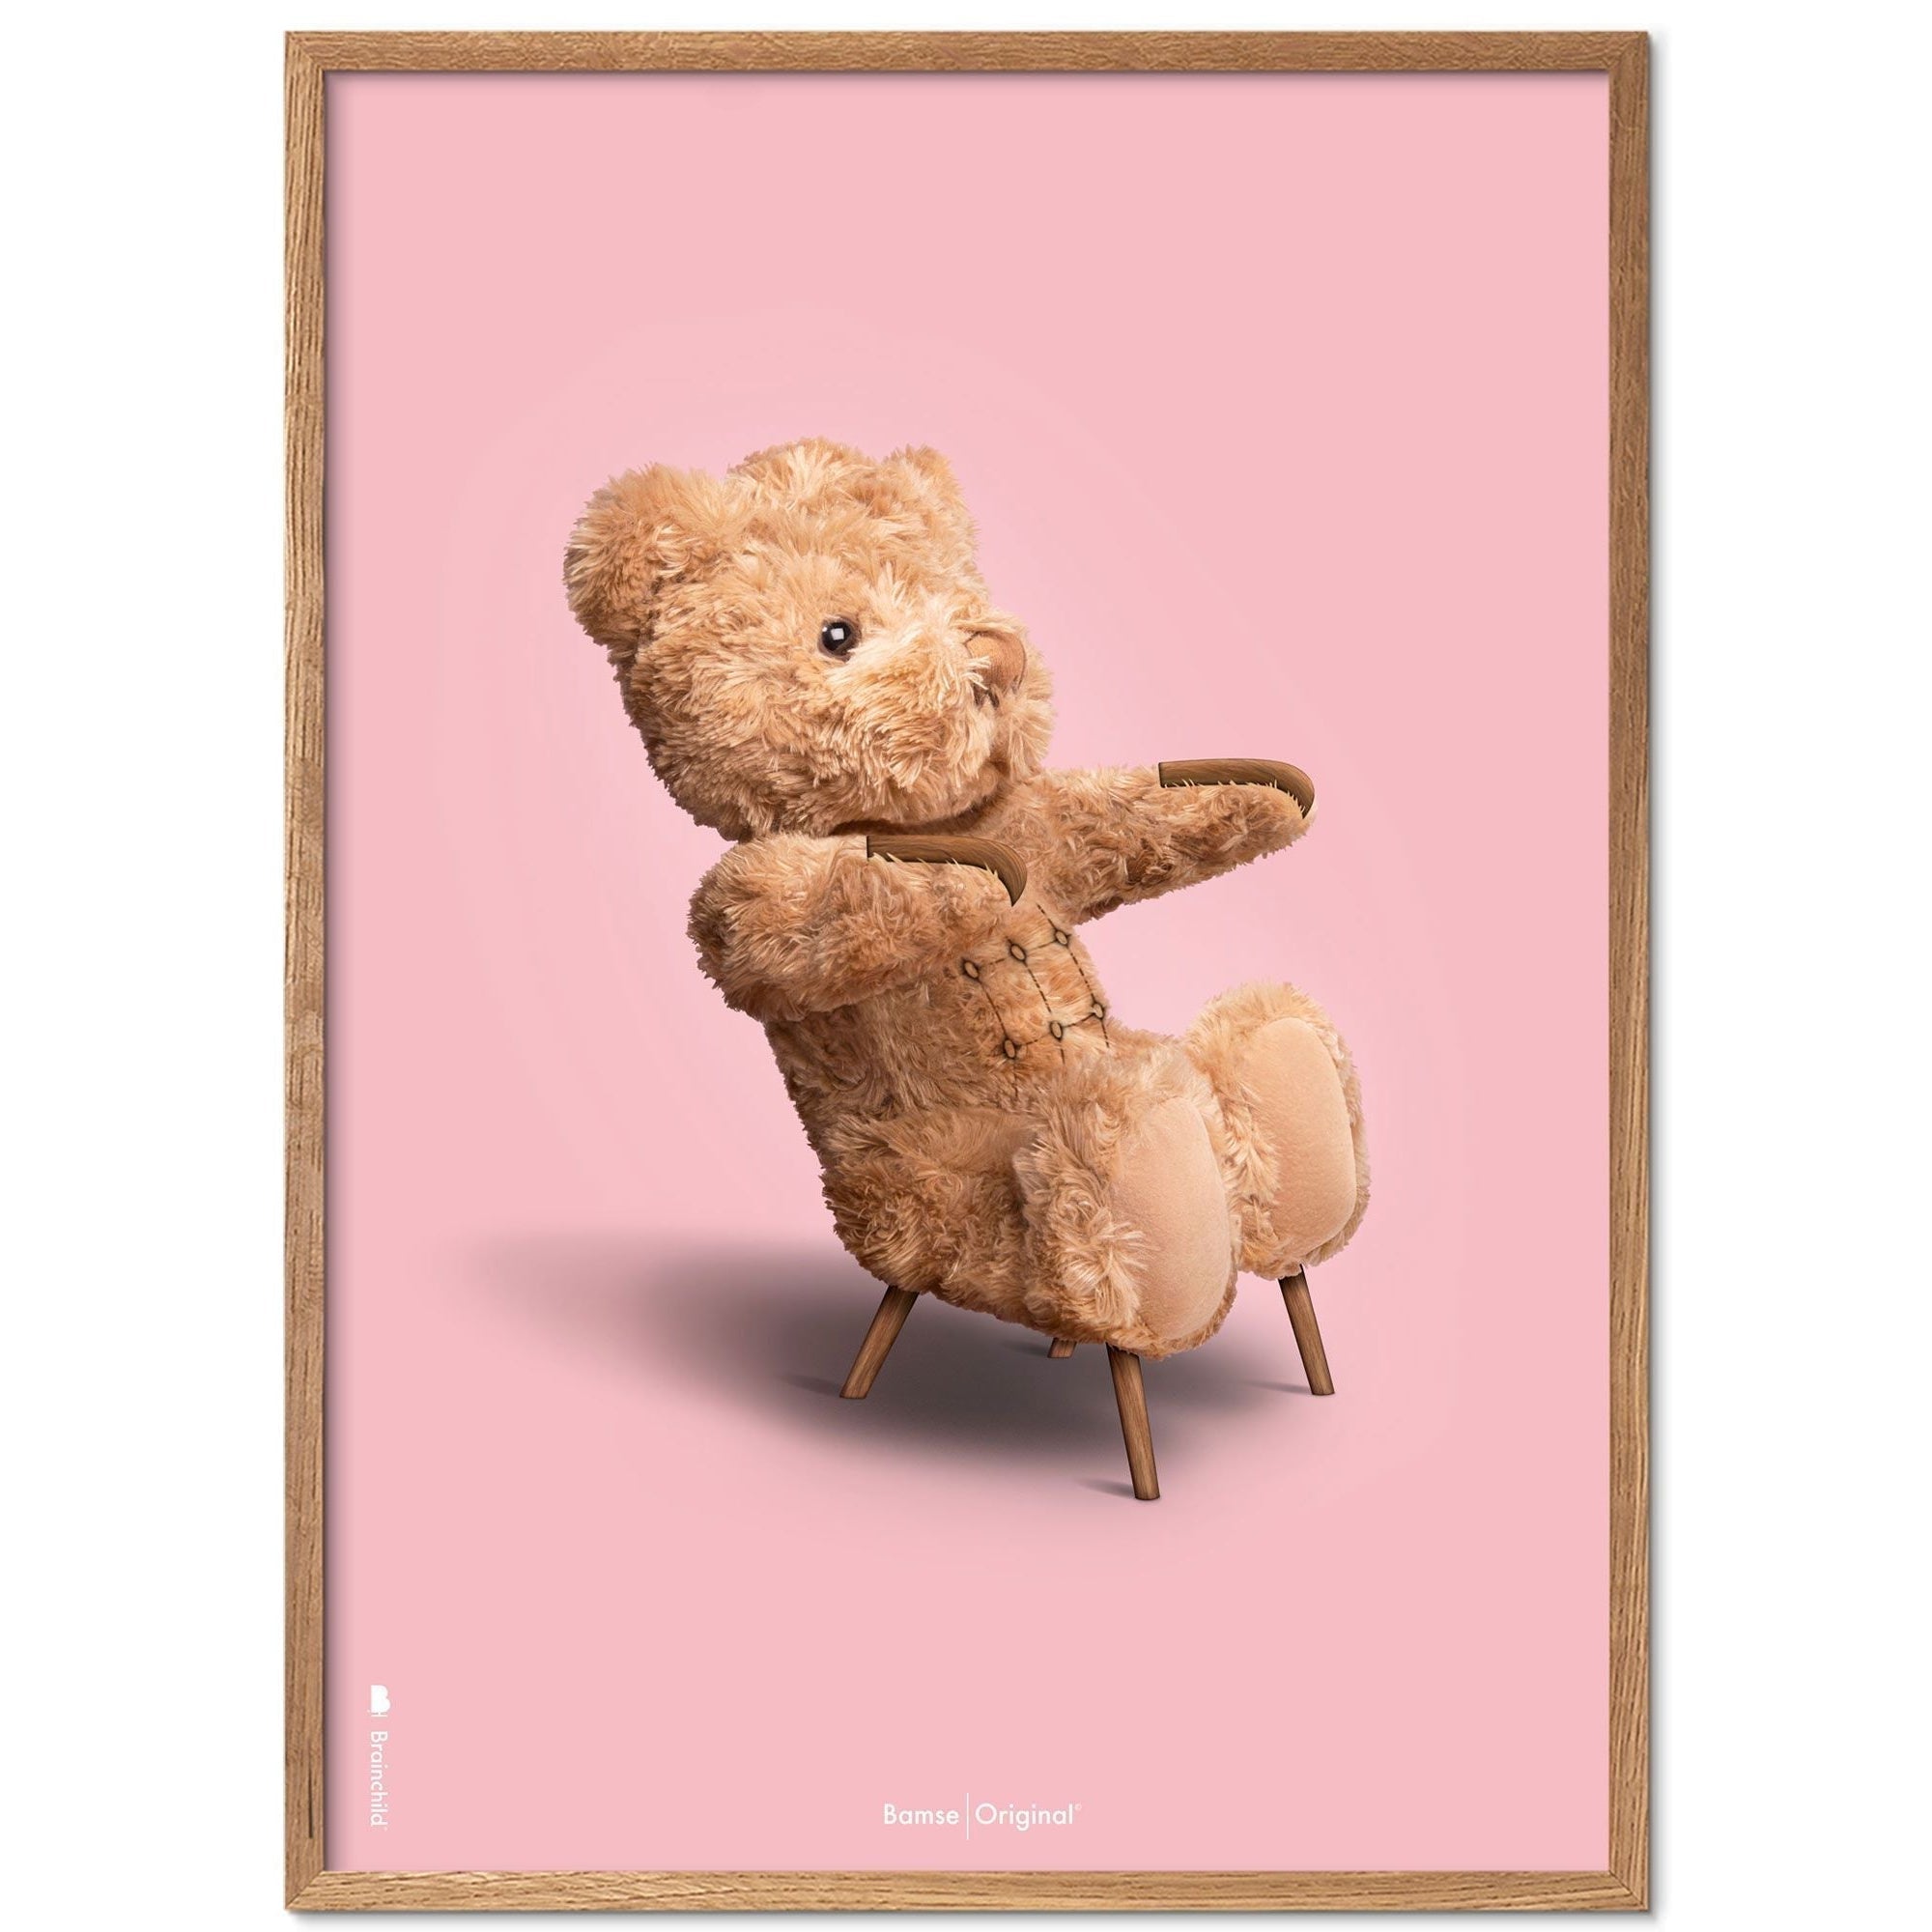 Brainchild Teddy Bear Classic Poster Frame lavet af let træ ramme 50x70 cm, lyserød baggrund